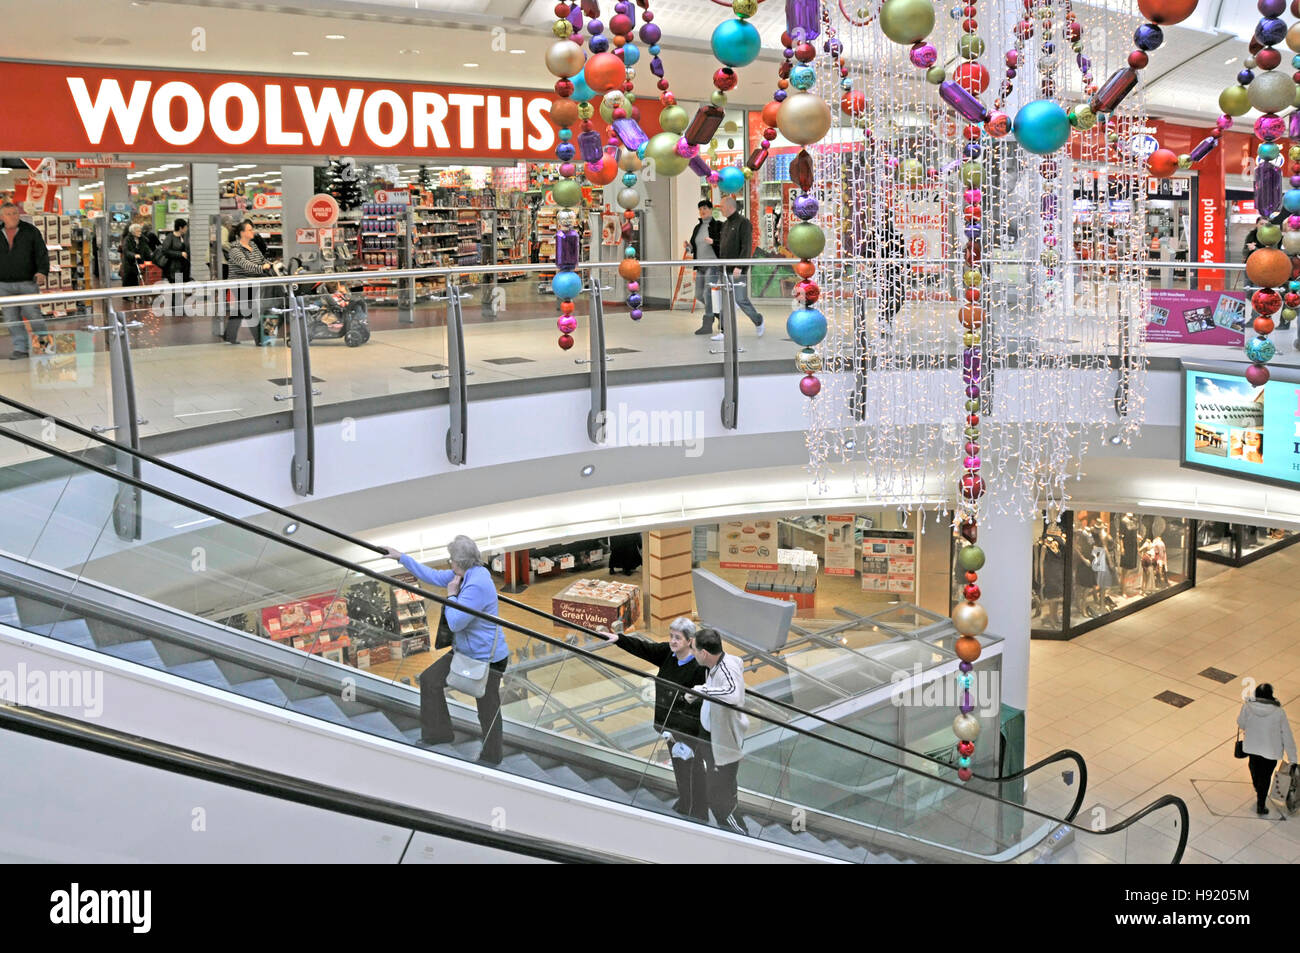 A Christmas scene in Robinsons Galleria shopping mall, Cebu City